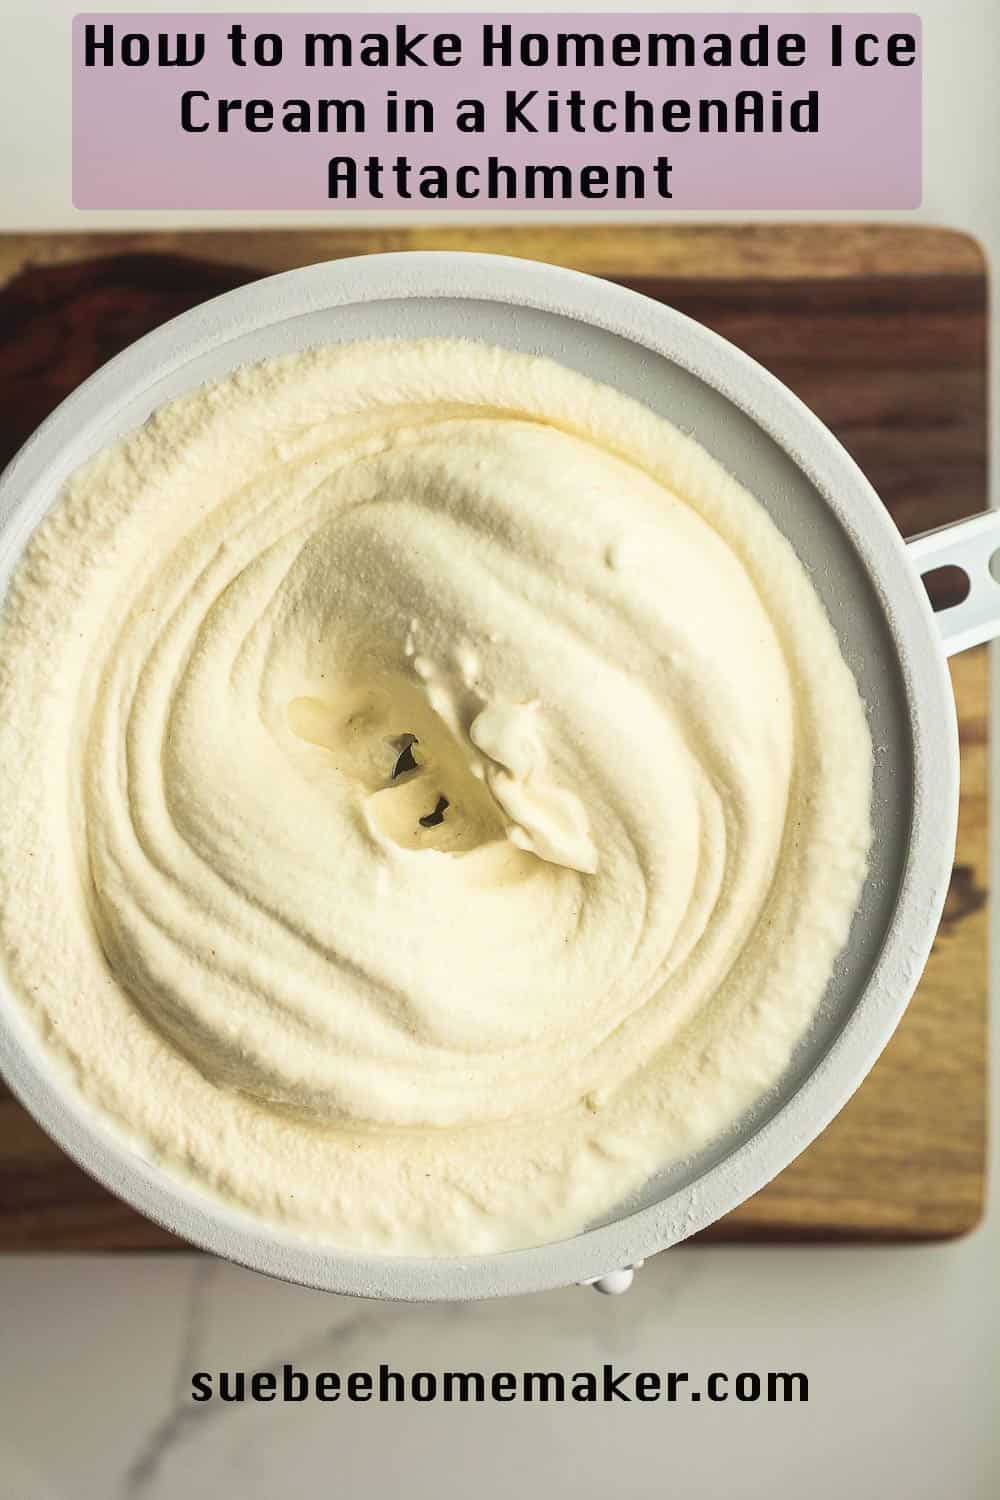 A Review of the KitchenAid Ice Cream Maker Attachment